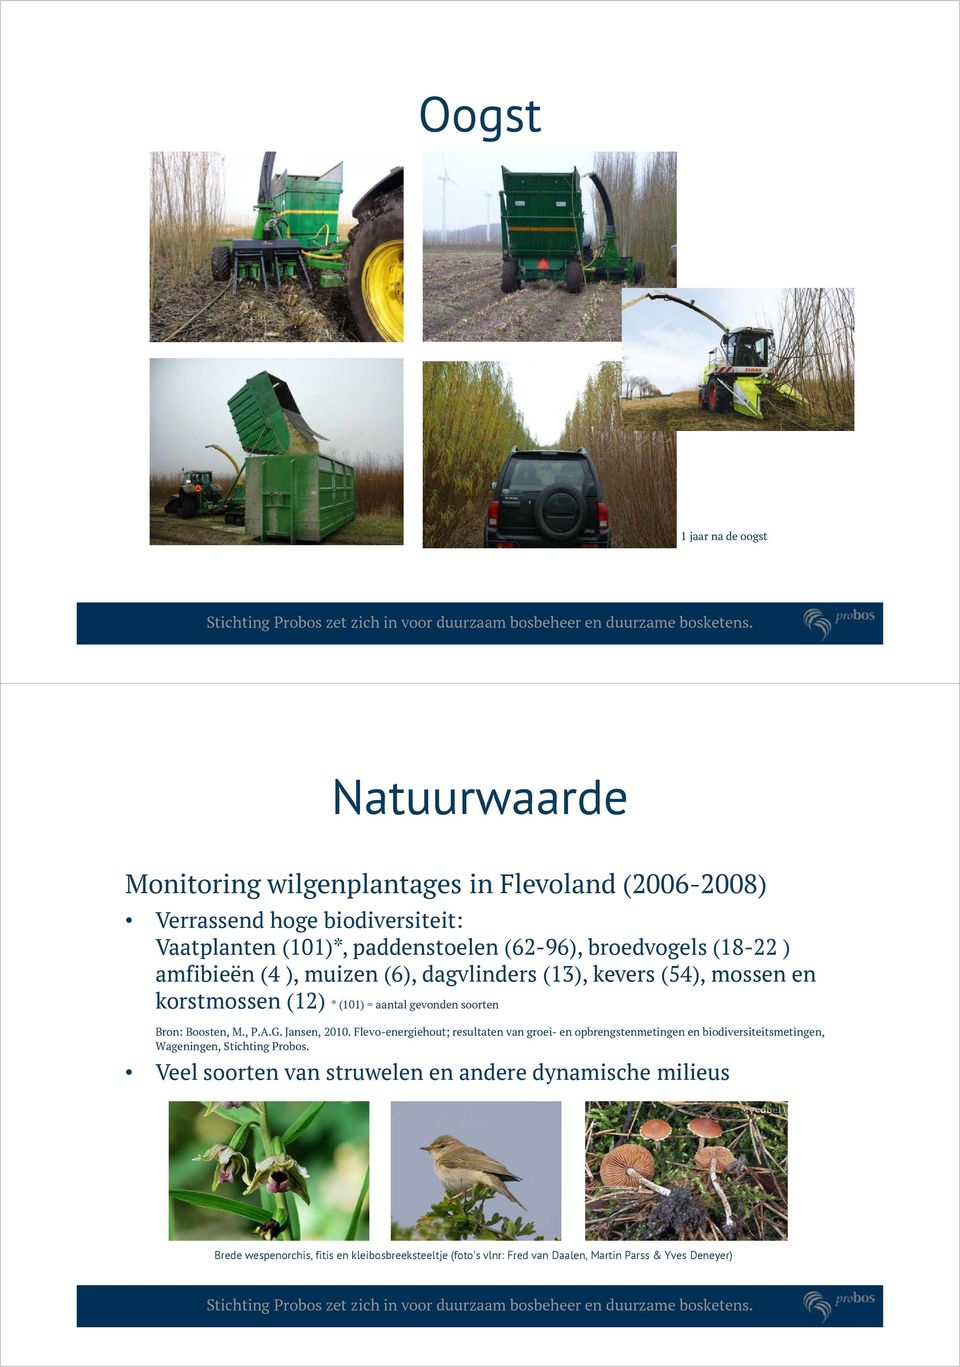 Boosten, M., P.A.G. Jansen, 2010. Flevo-energiehout; resultaten van groei- en opbrengstenmetingen en biodiversiteitsmetingen, Wageningen, Stichting Probos.